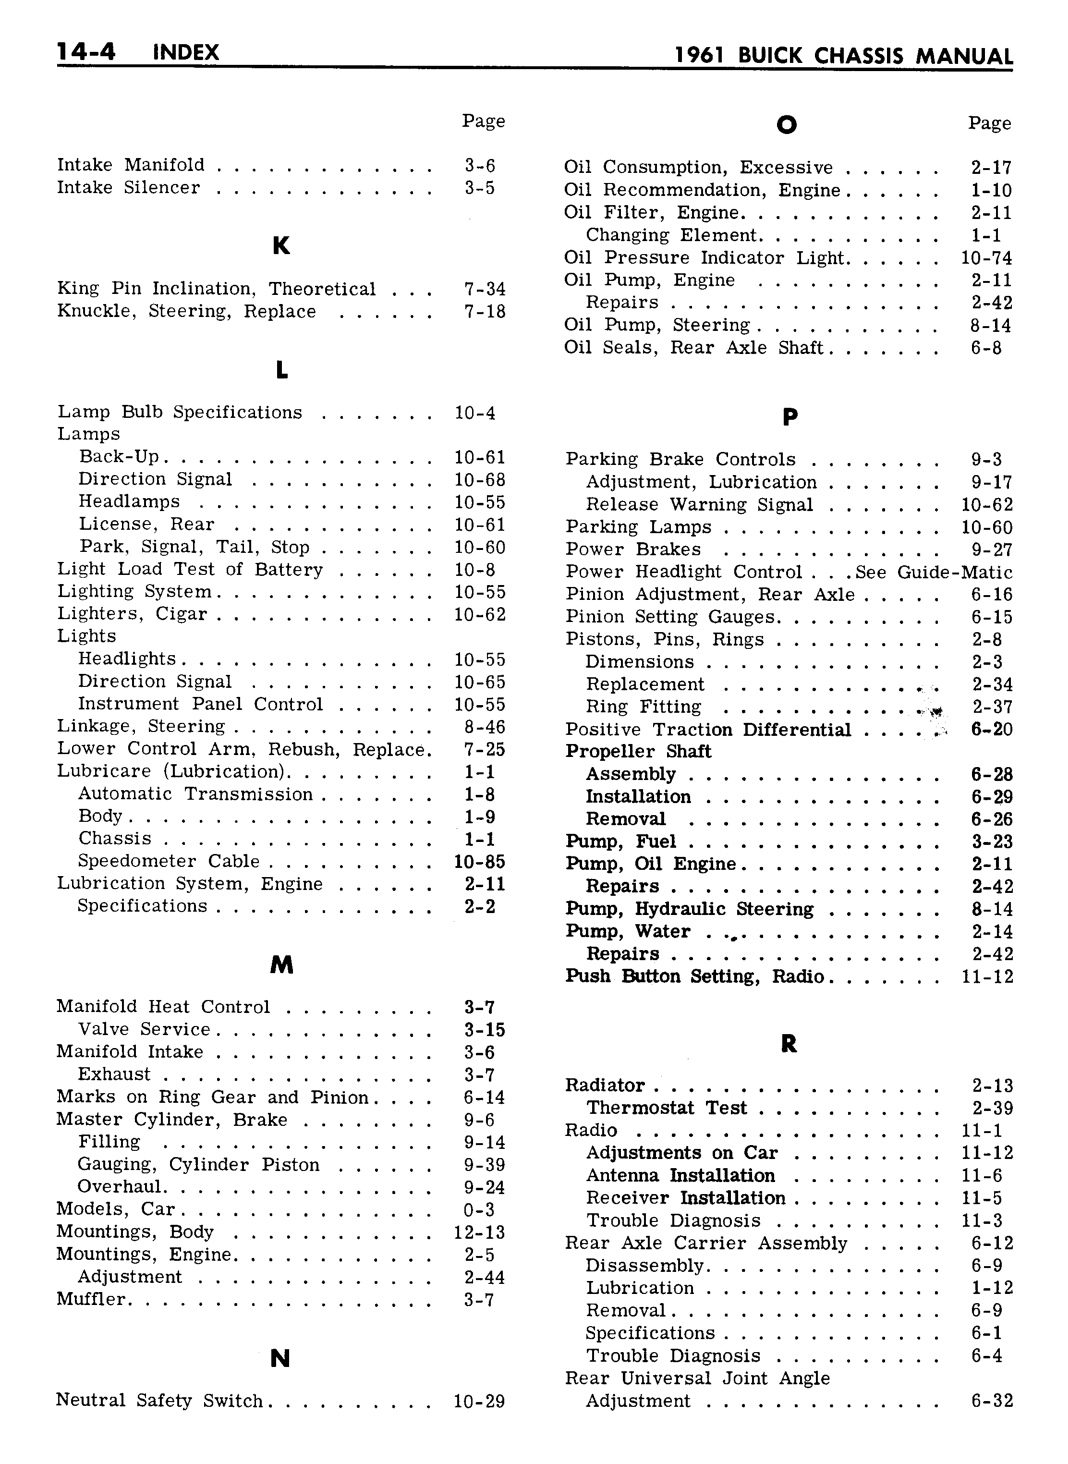 n_13 1961 Buick Shop Manual - Index-004-004.jpg